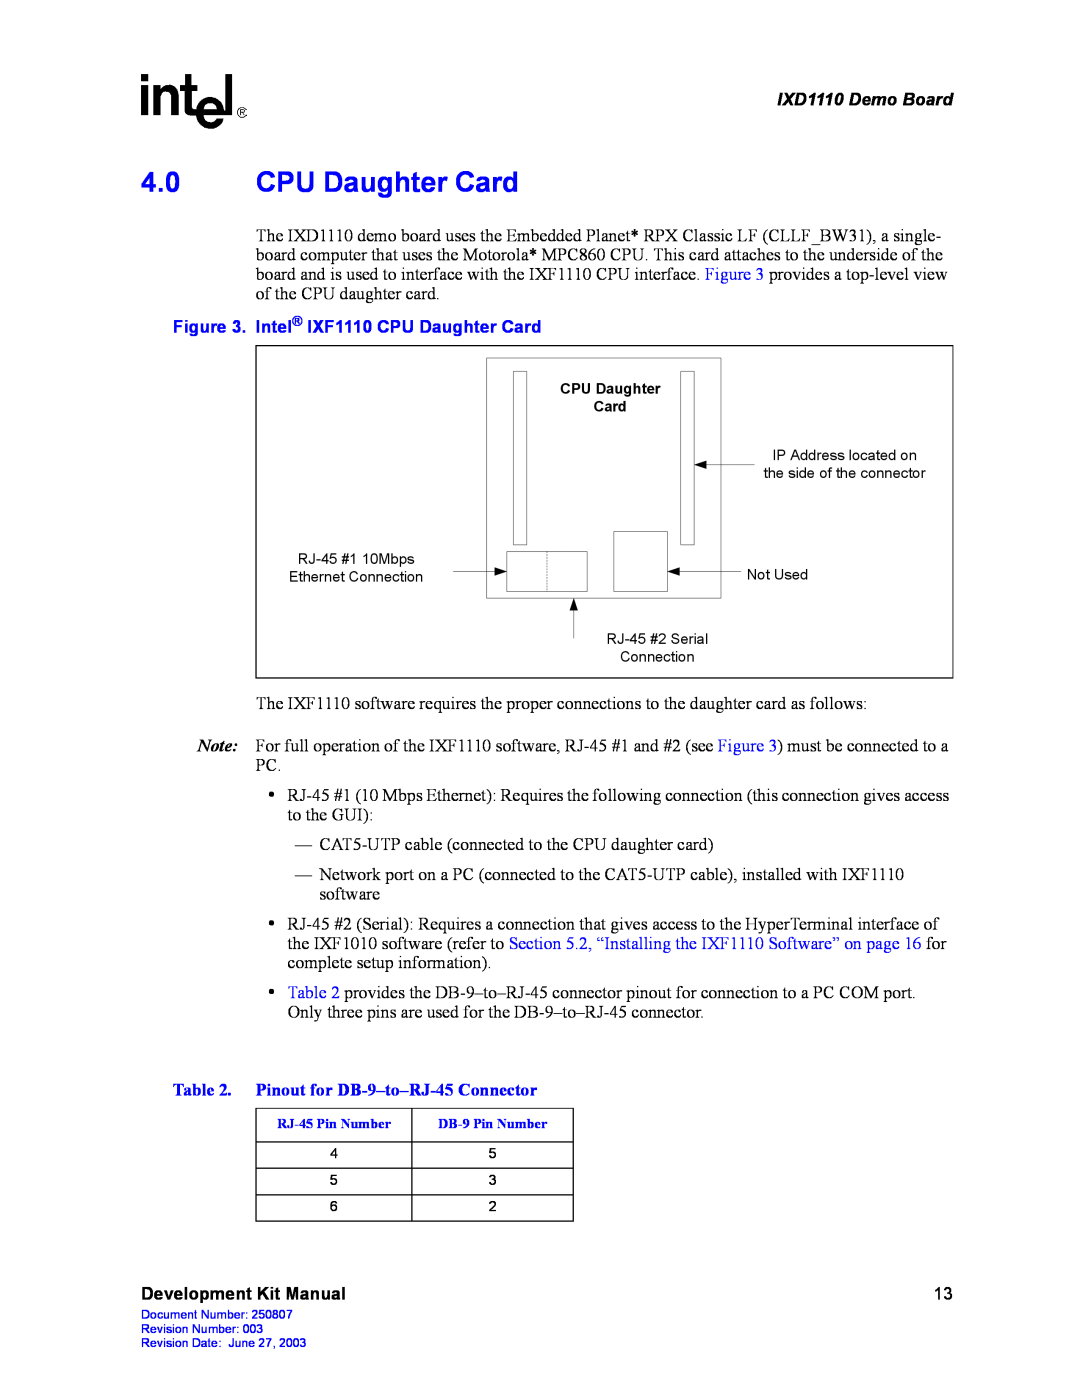 Intel manual Intel IXF1110 CPU Daughter Card, IXD1110 Demo Board, Pinout for DB-9-to-RJ-45 Connector 